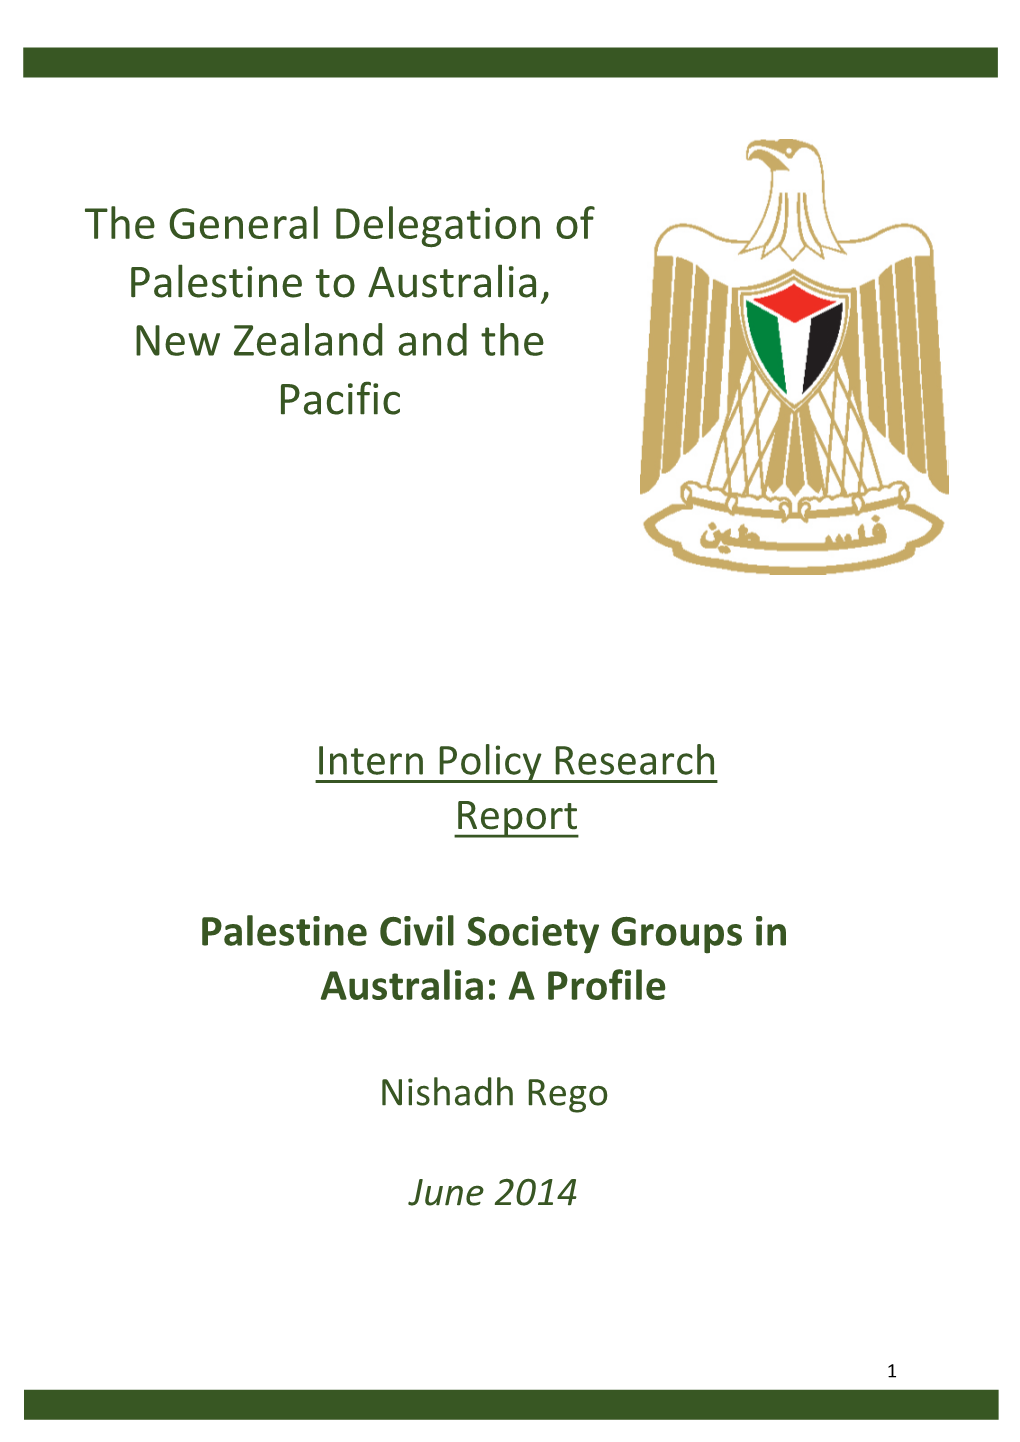 Palestine Civil Society Groups in Australia: a Profile